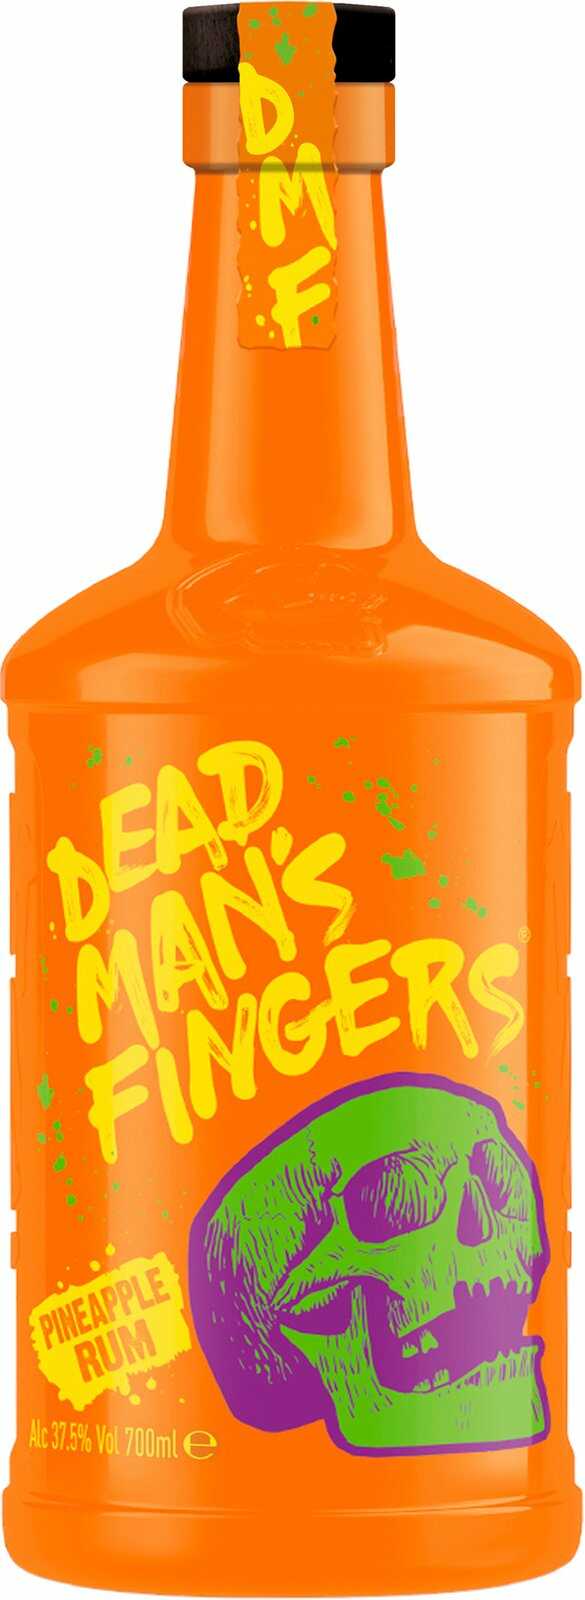 Dead Man's Fingers Pineapple Rum 37,5% 0,7 l